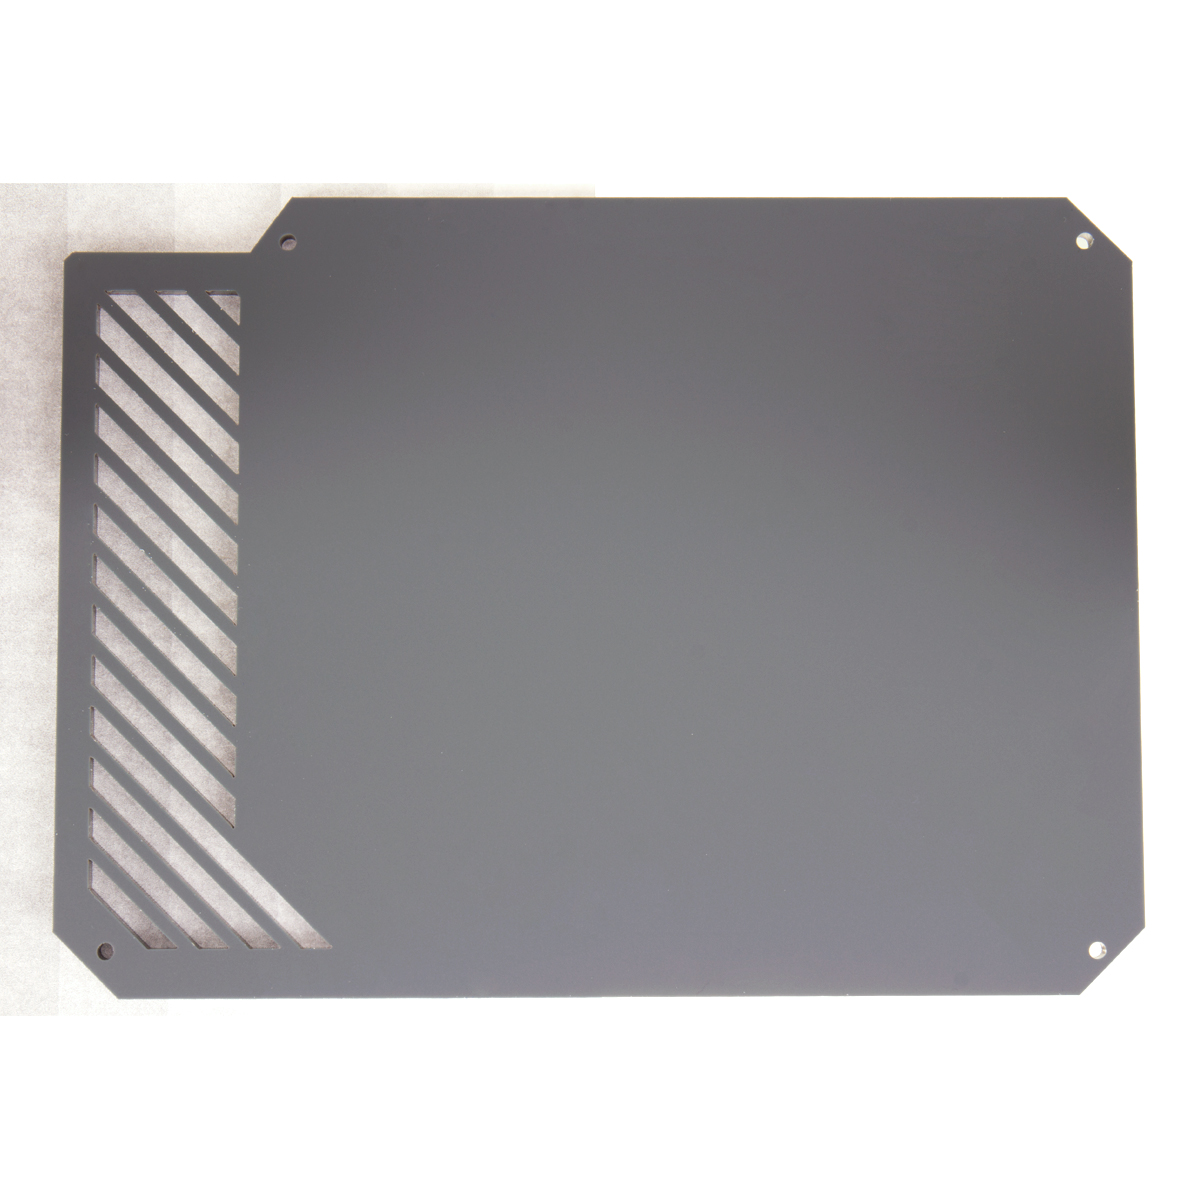 Lazer3D LZ7 Front Panel - Mineral Grey